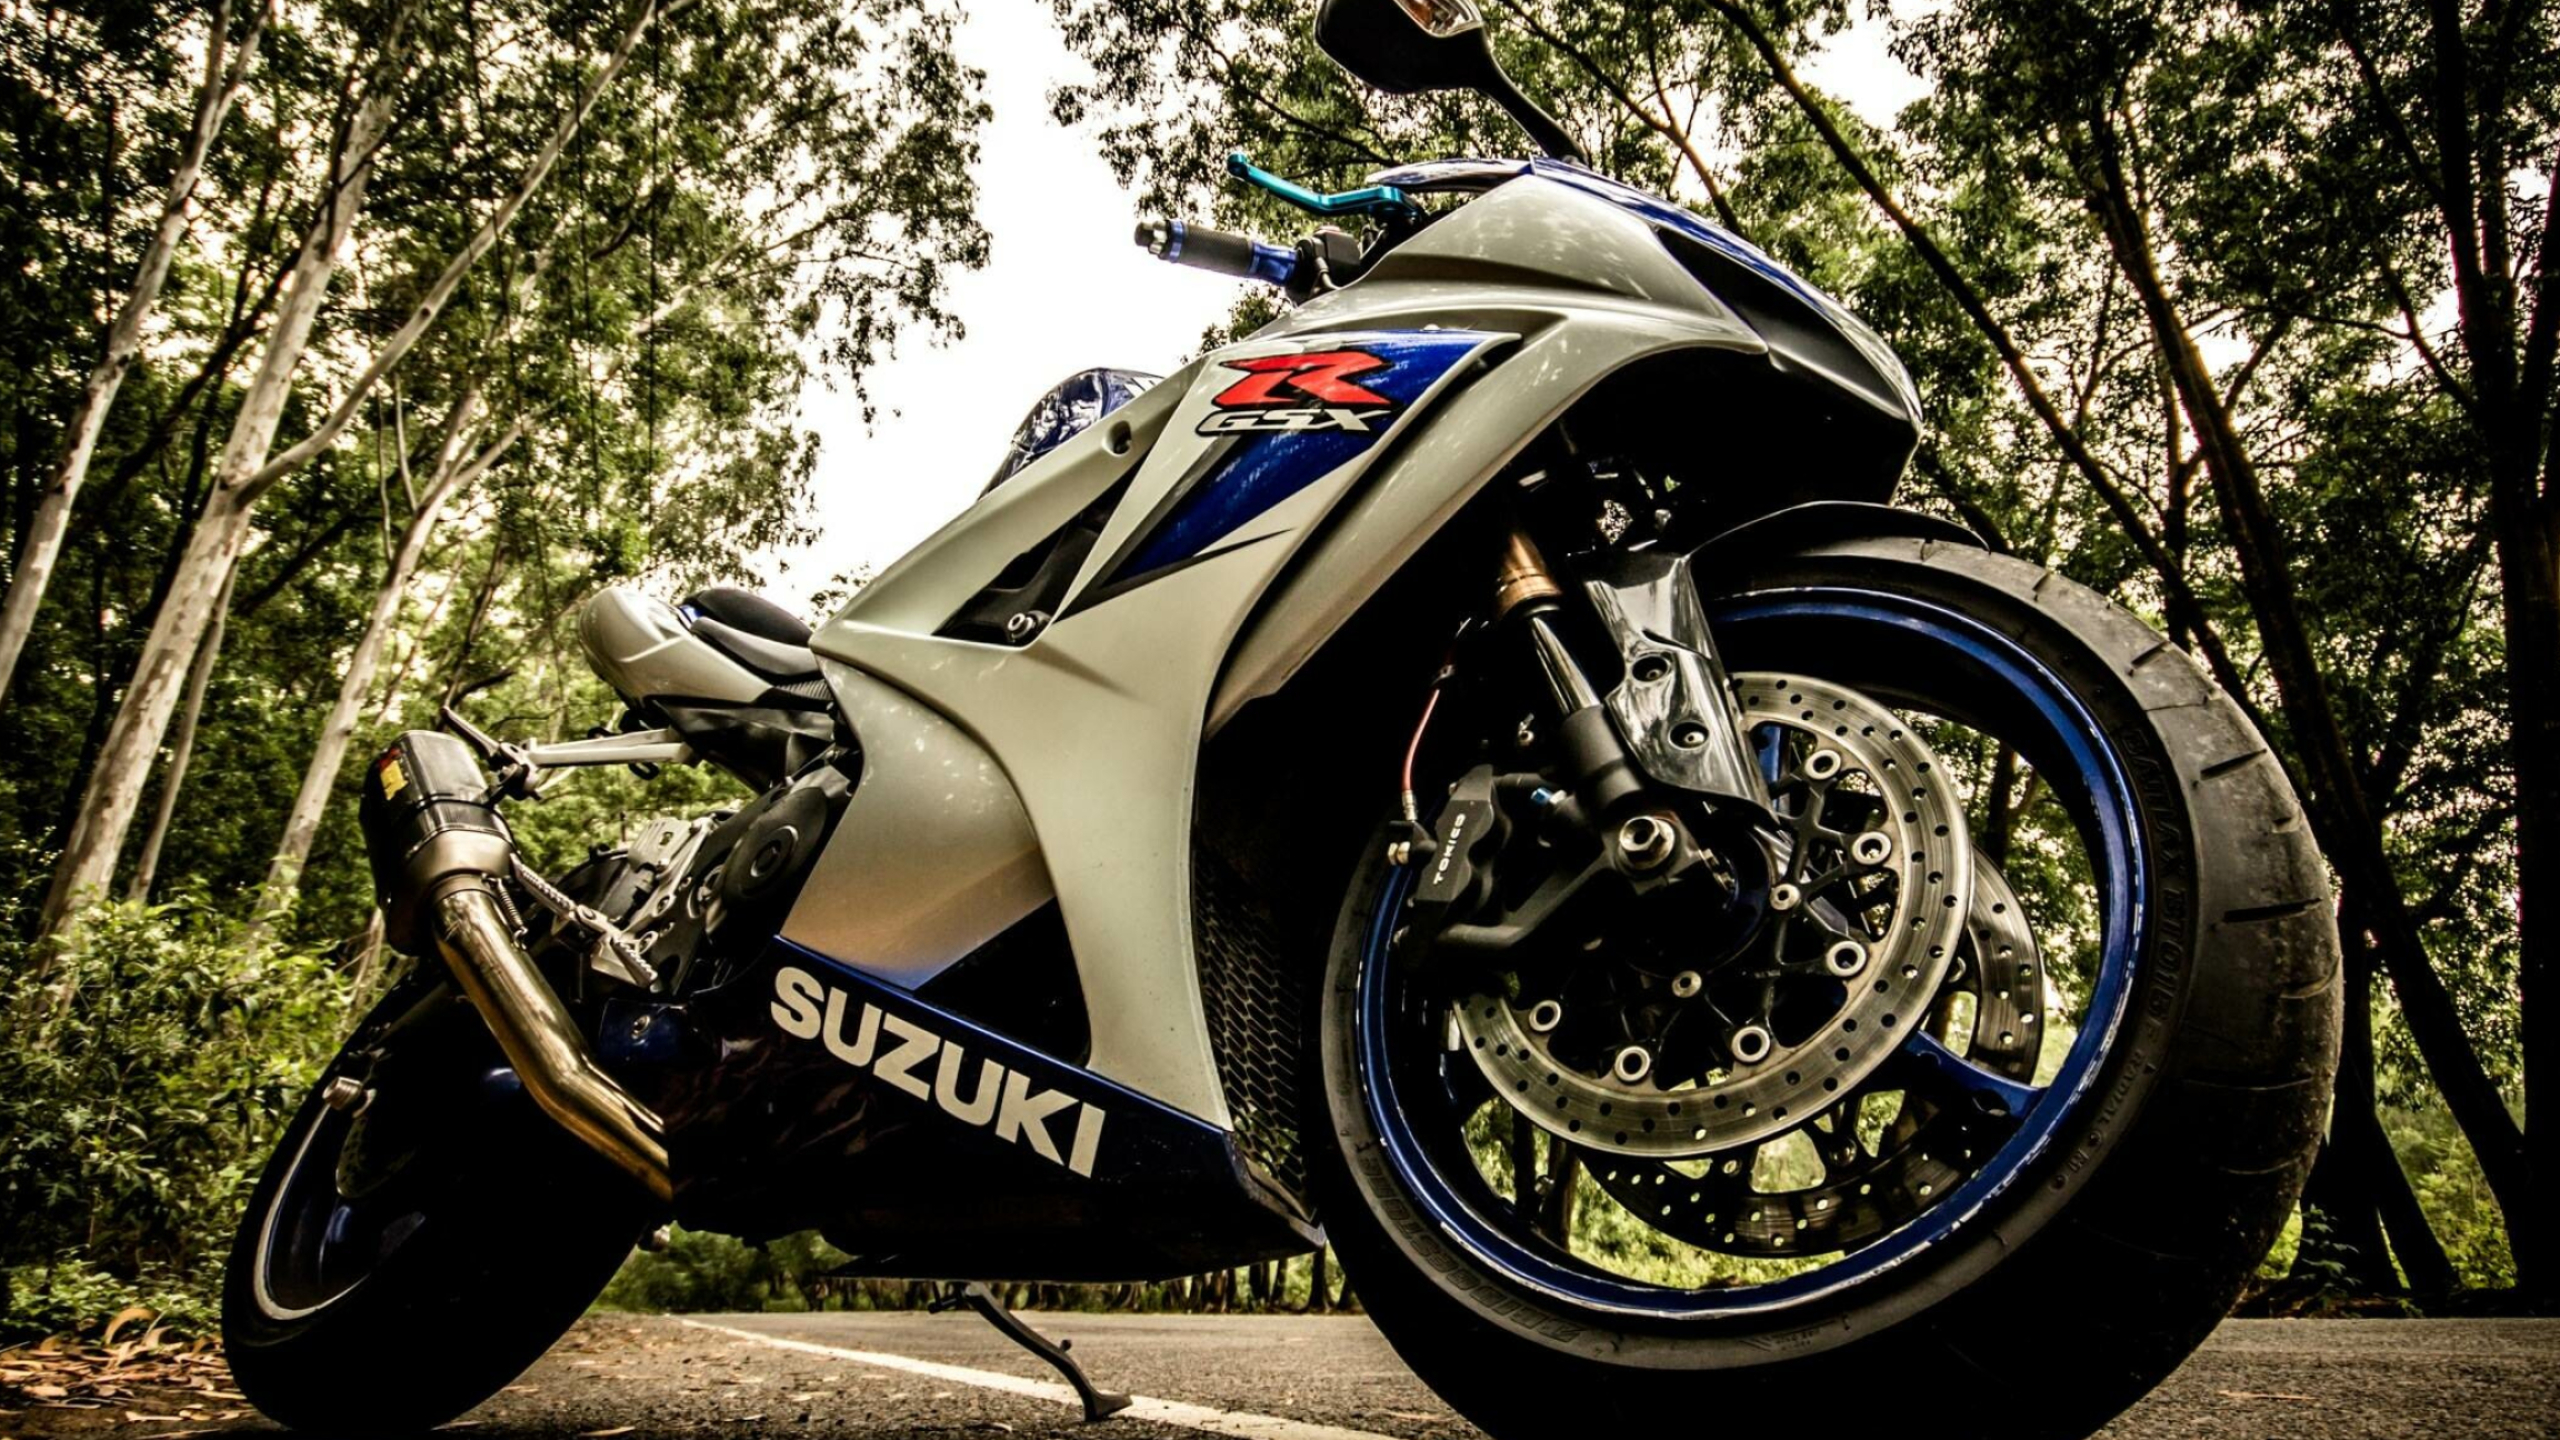 GSX-R: Gixxer 750, A sports motorcycle made by Suzuki, Bike. 2560x1440 HD Wallpaper.